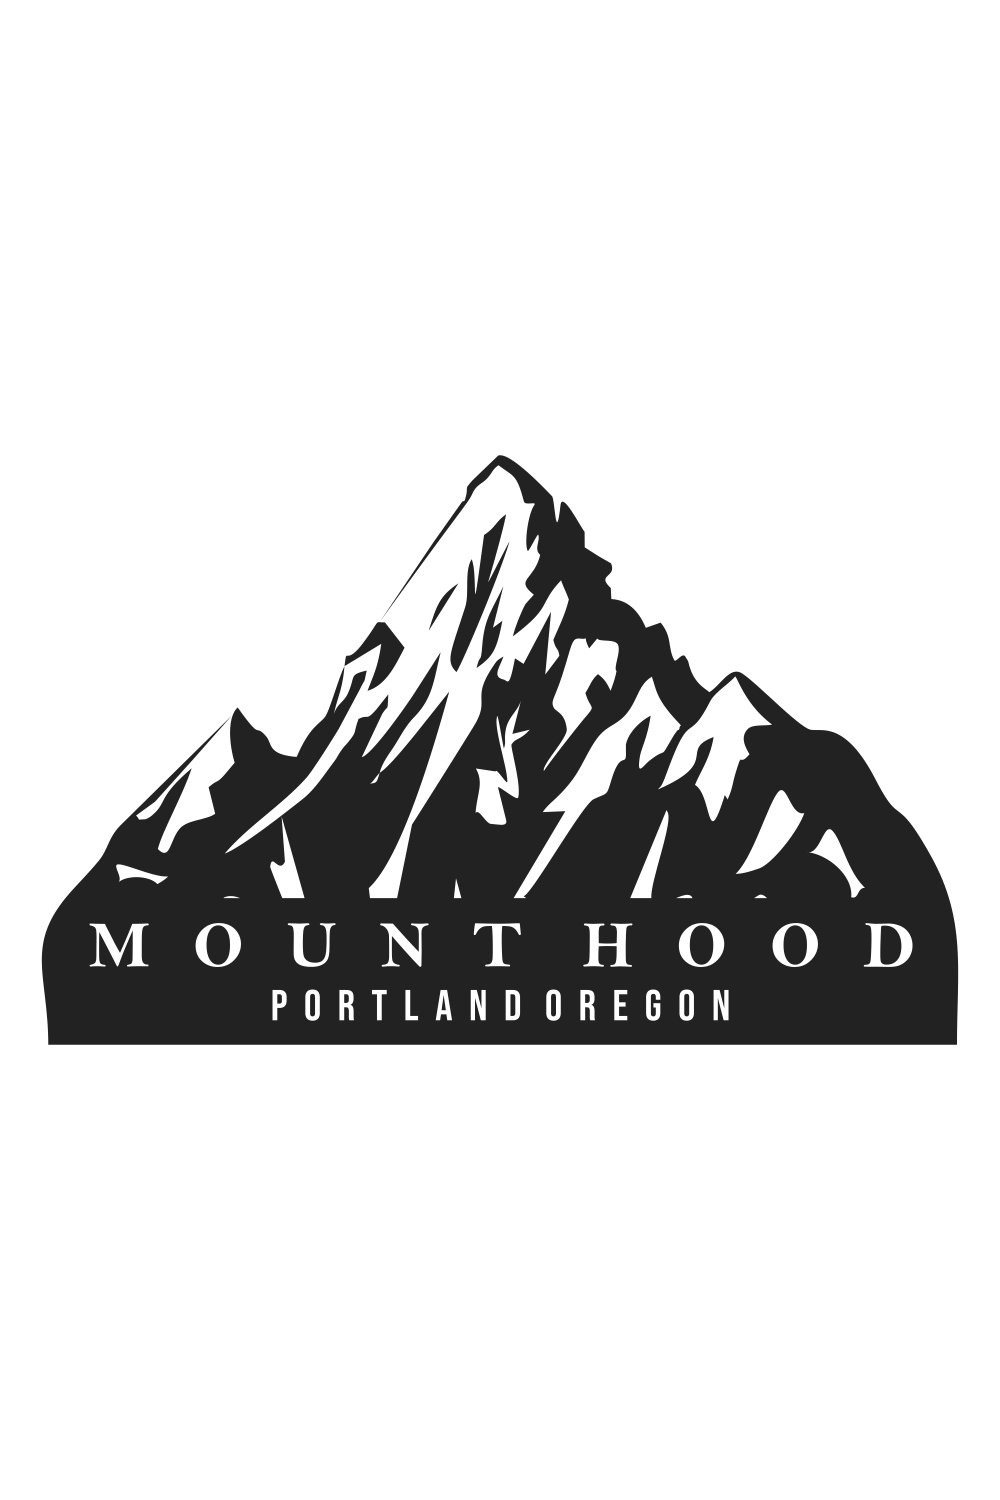 Silhouette of Mount Hood Portland Oregon Mountain logo design pinterest preview image.